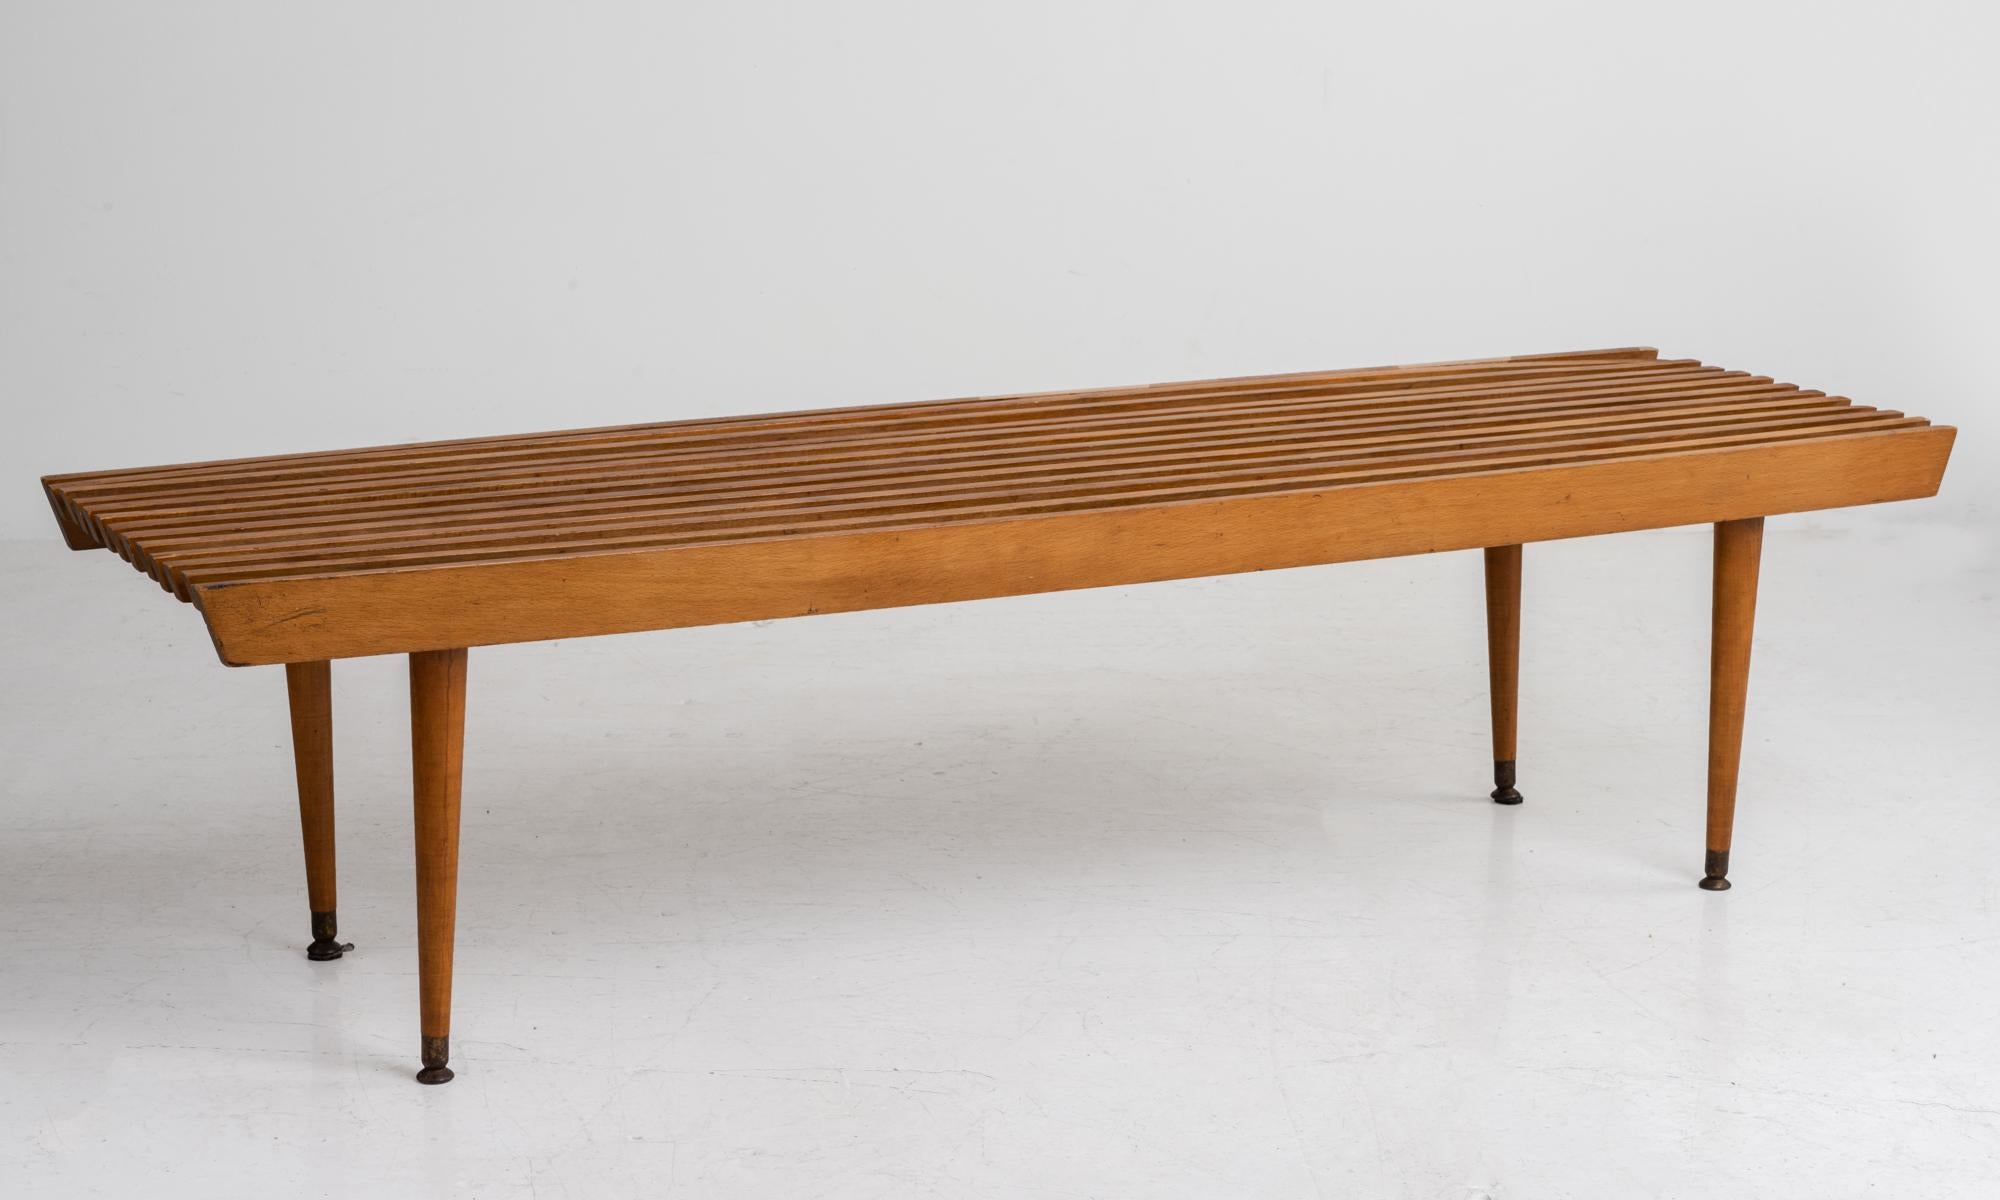 Slatted modern coffee table

America, circa 1960

Hardwood coffee table with brass feet.

Measures: 60